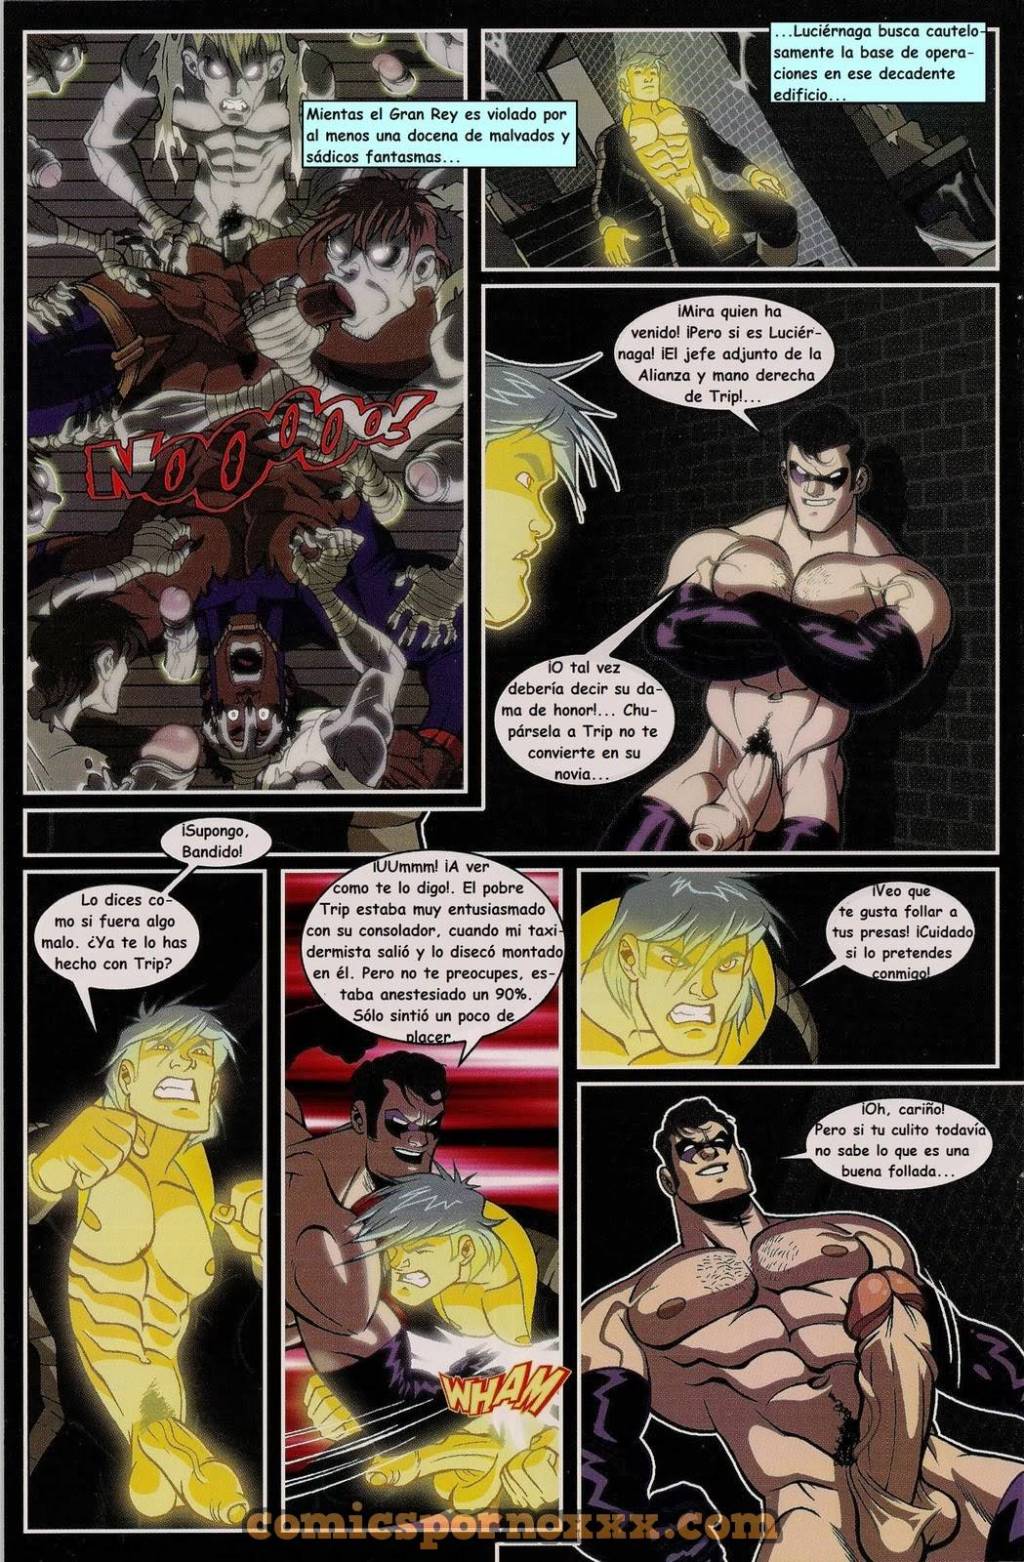 Justicia al Desnudo #2 (Comics de Superhéroes muy Gay) - 11 - Comics Porno - Hentai Manga - Cartoon XXX